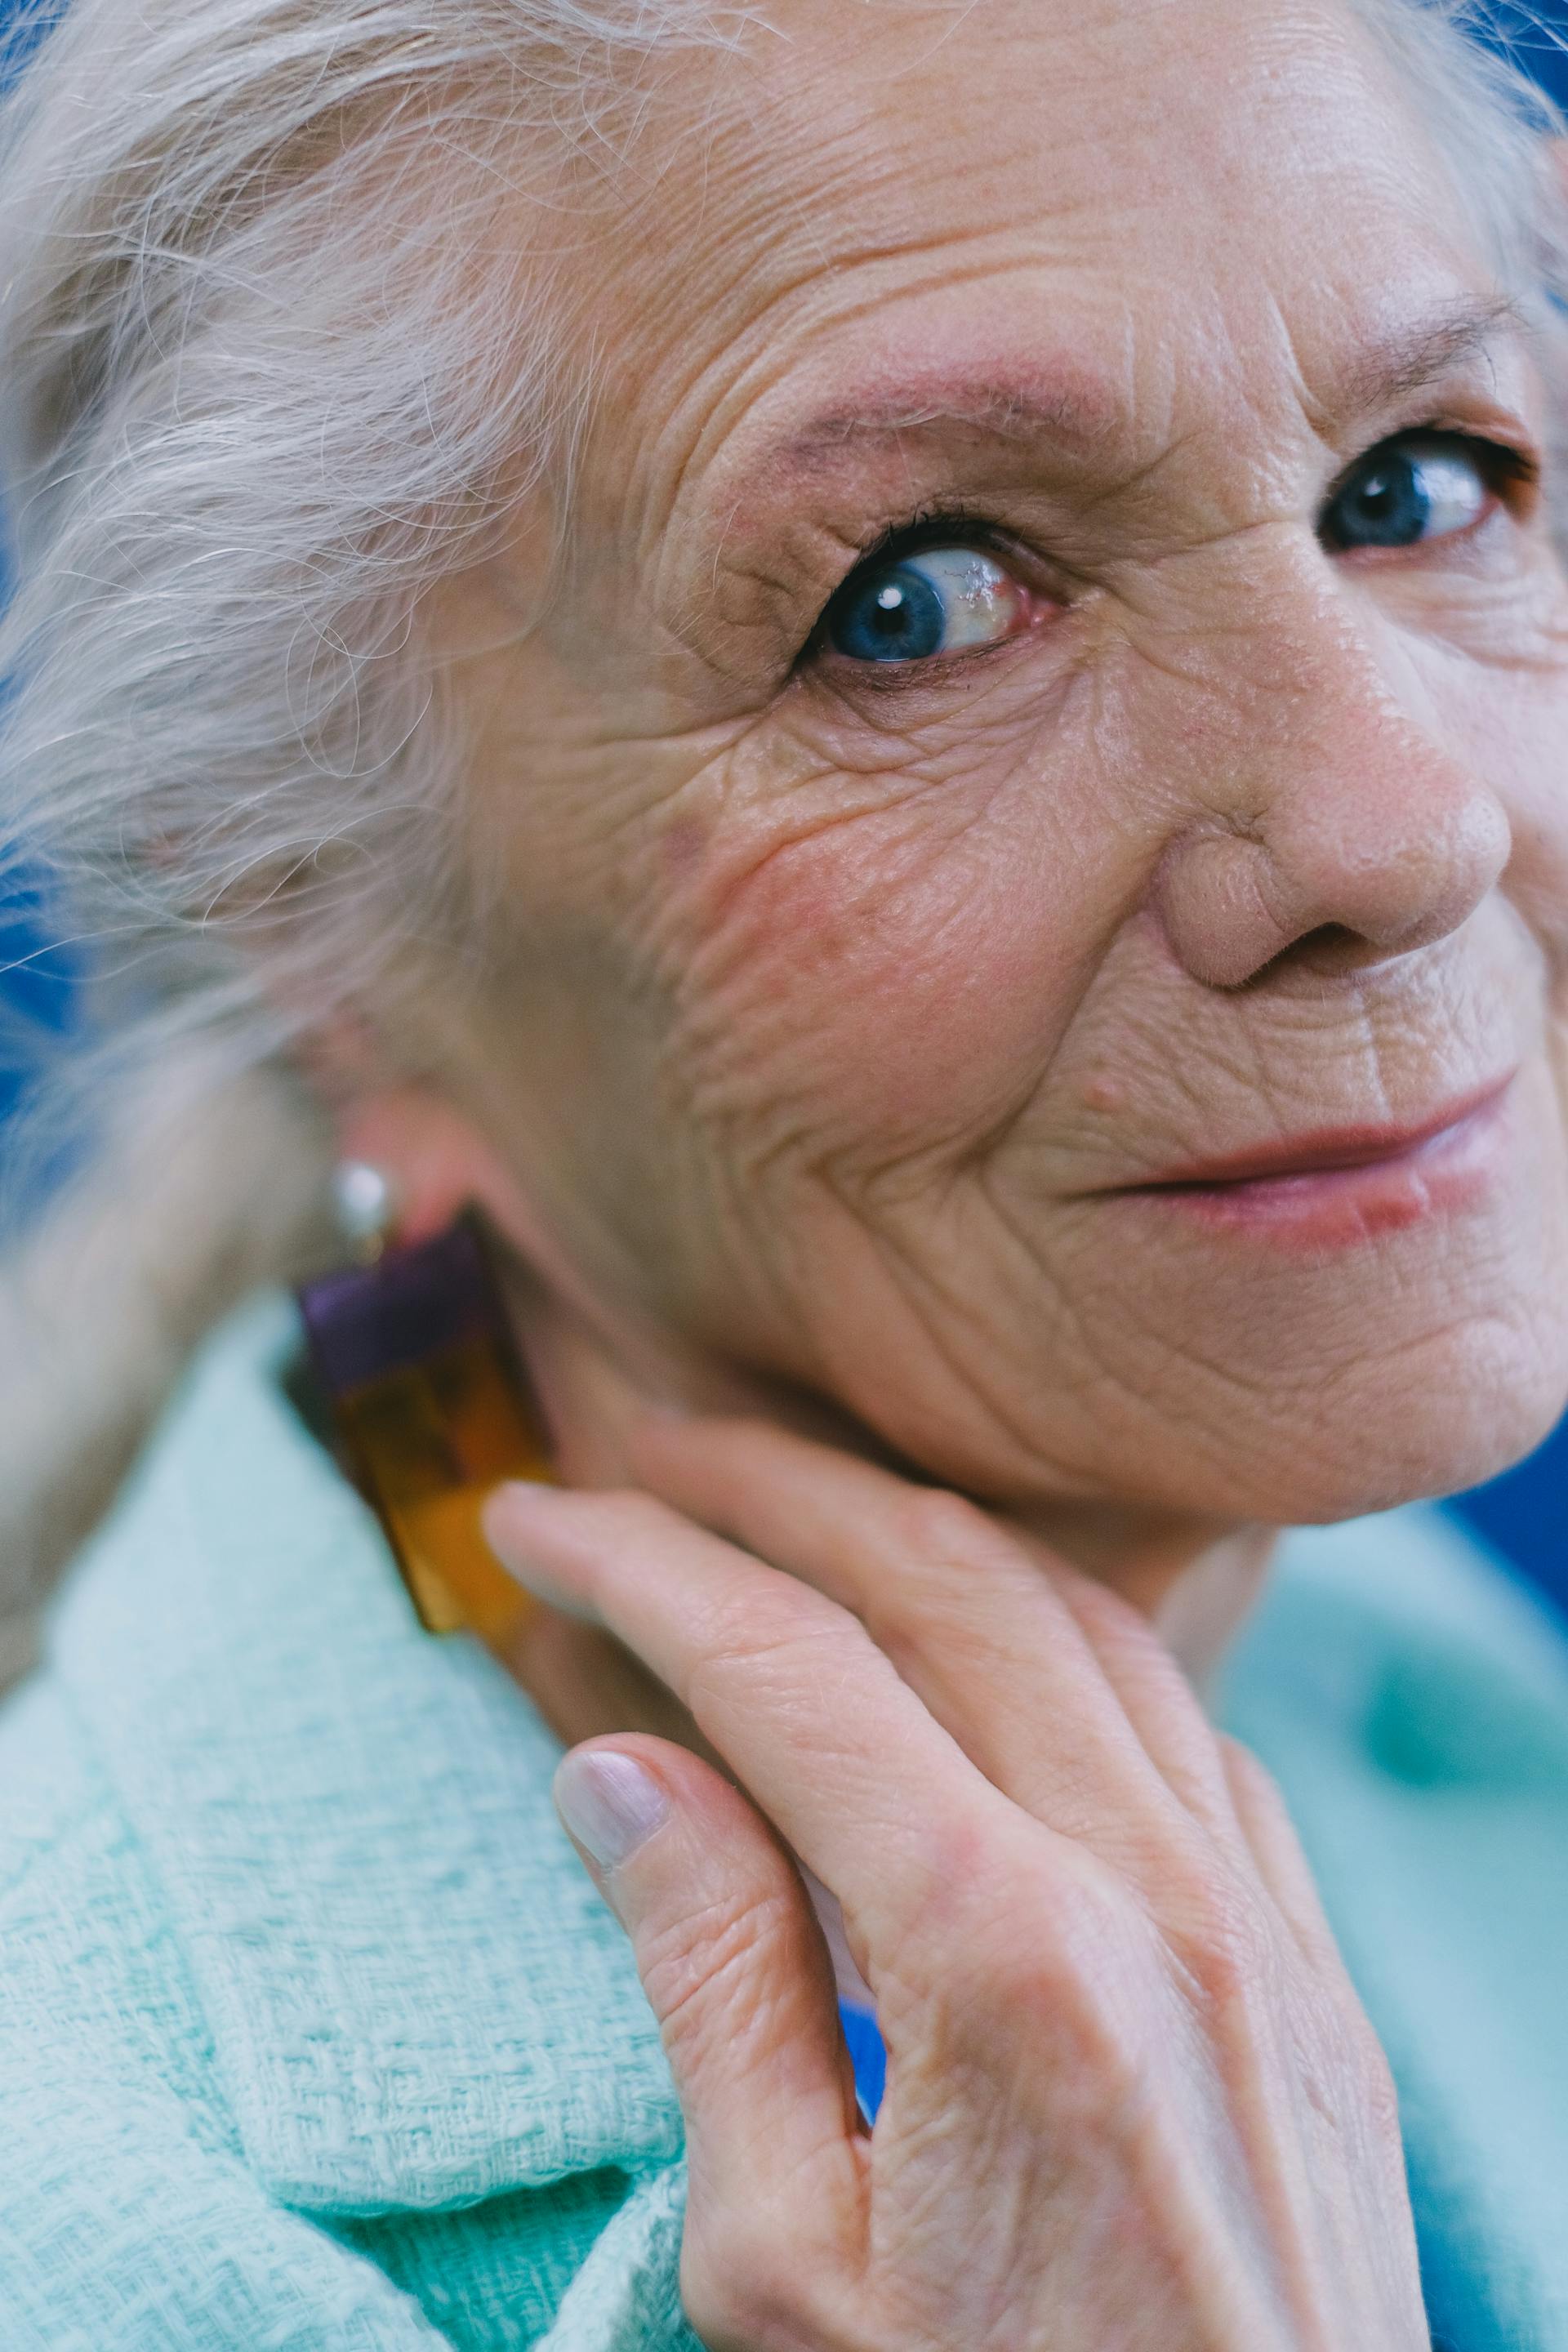 An older woman | Source: Pexels